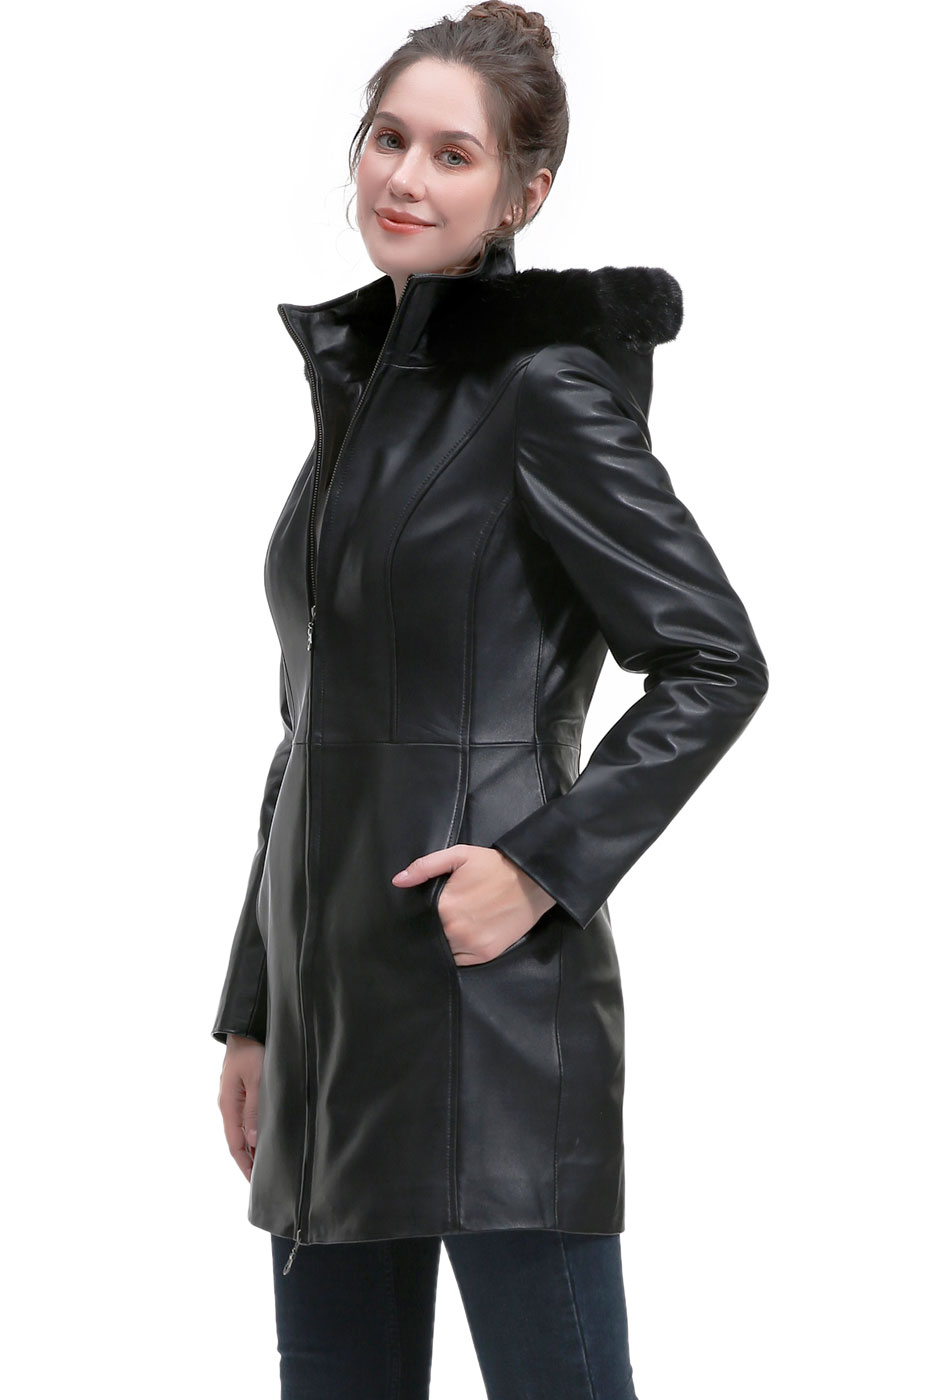 Women New Zealand Lambskin Leather Parka Coat (Regular & Plus Size & Petite) - image 3 of 5